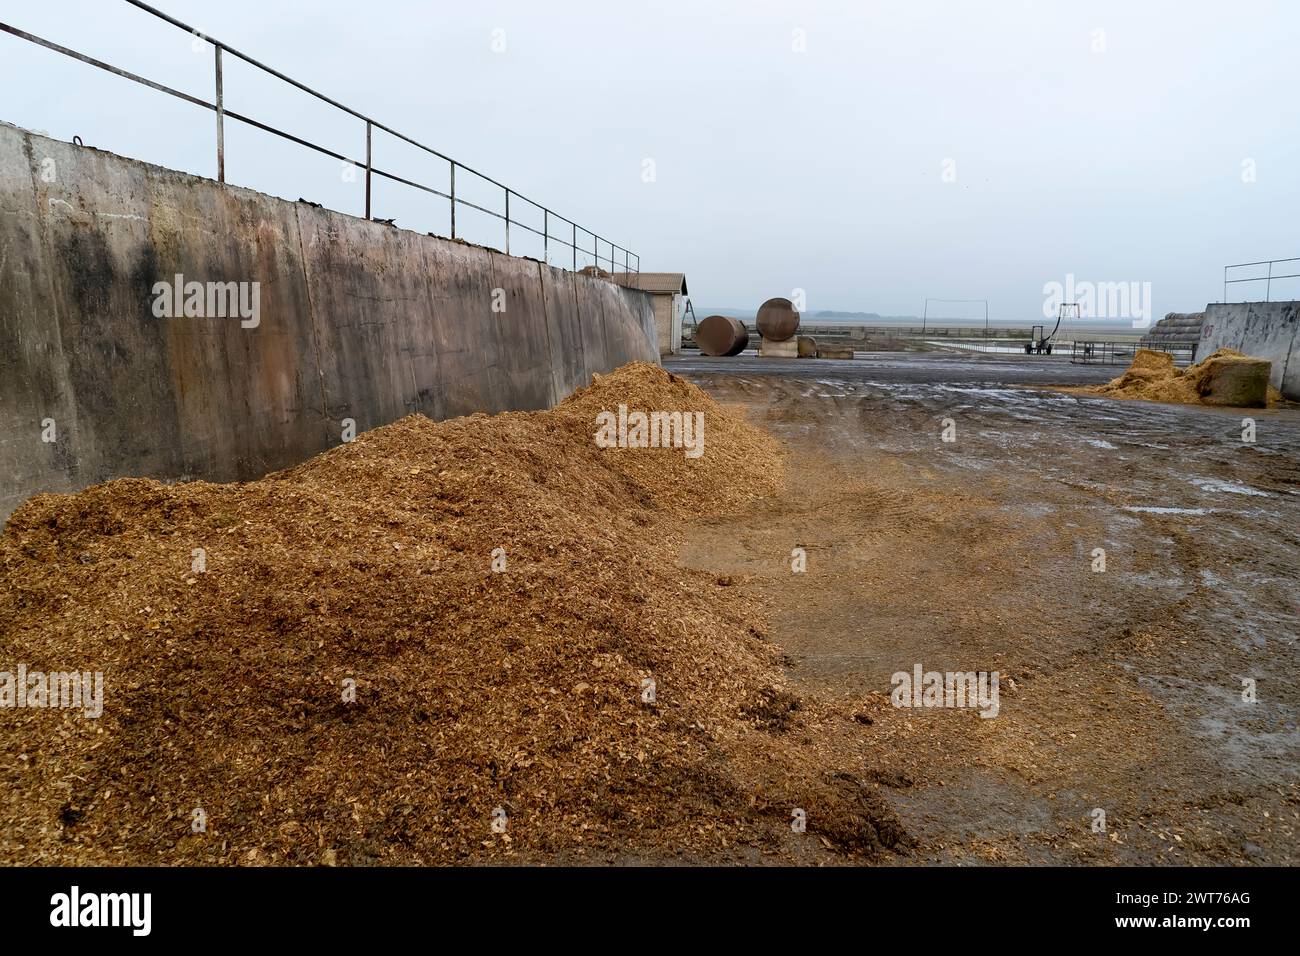 Silo pit, animal feed storage. Stock Photo